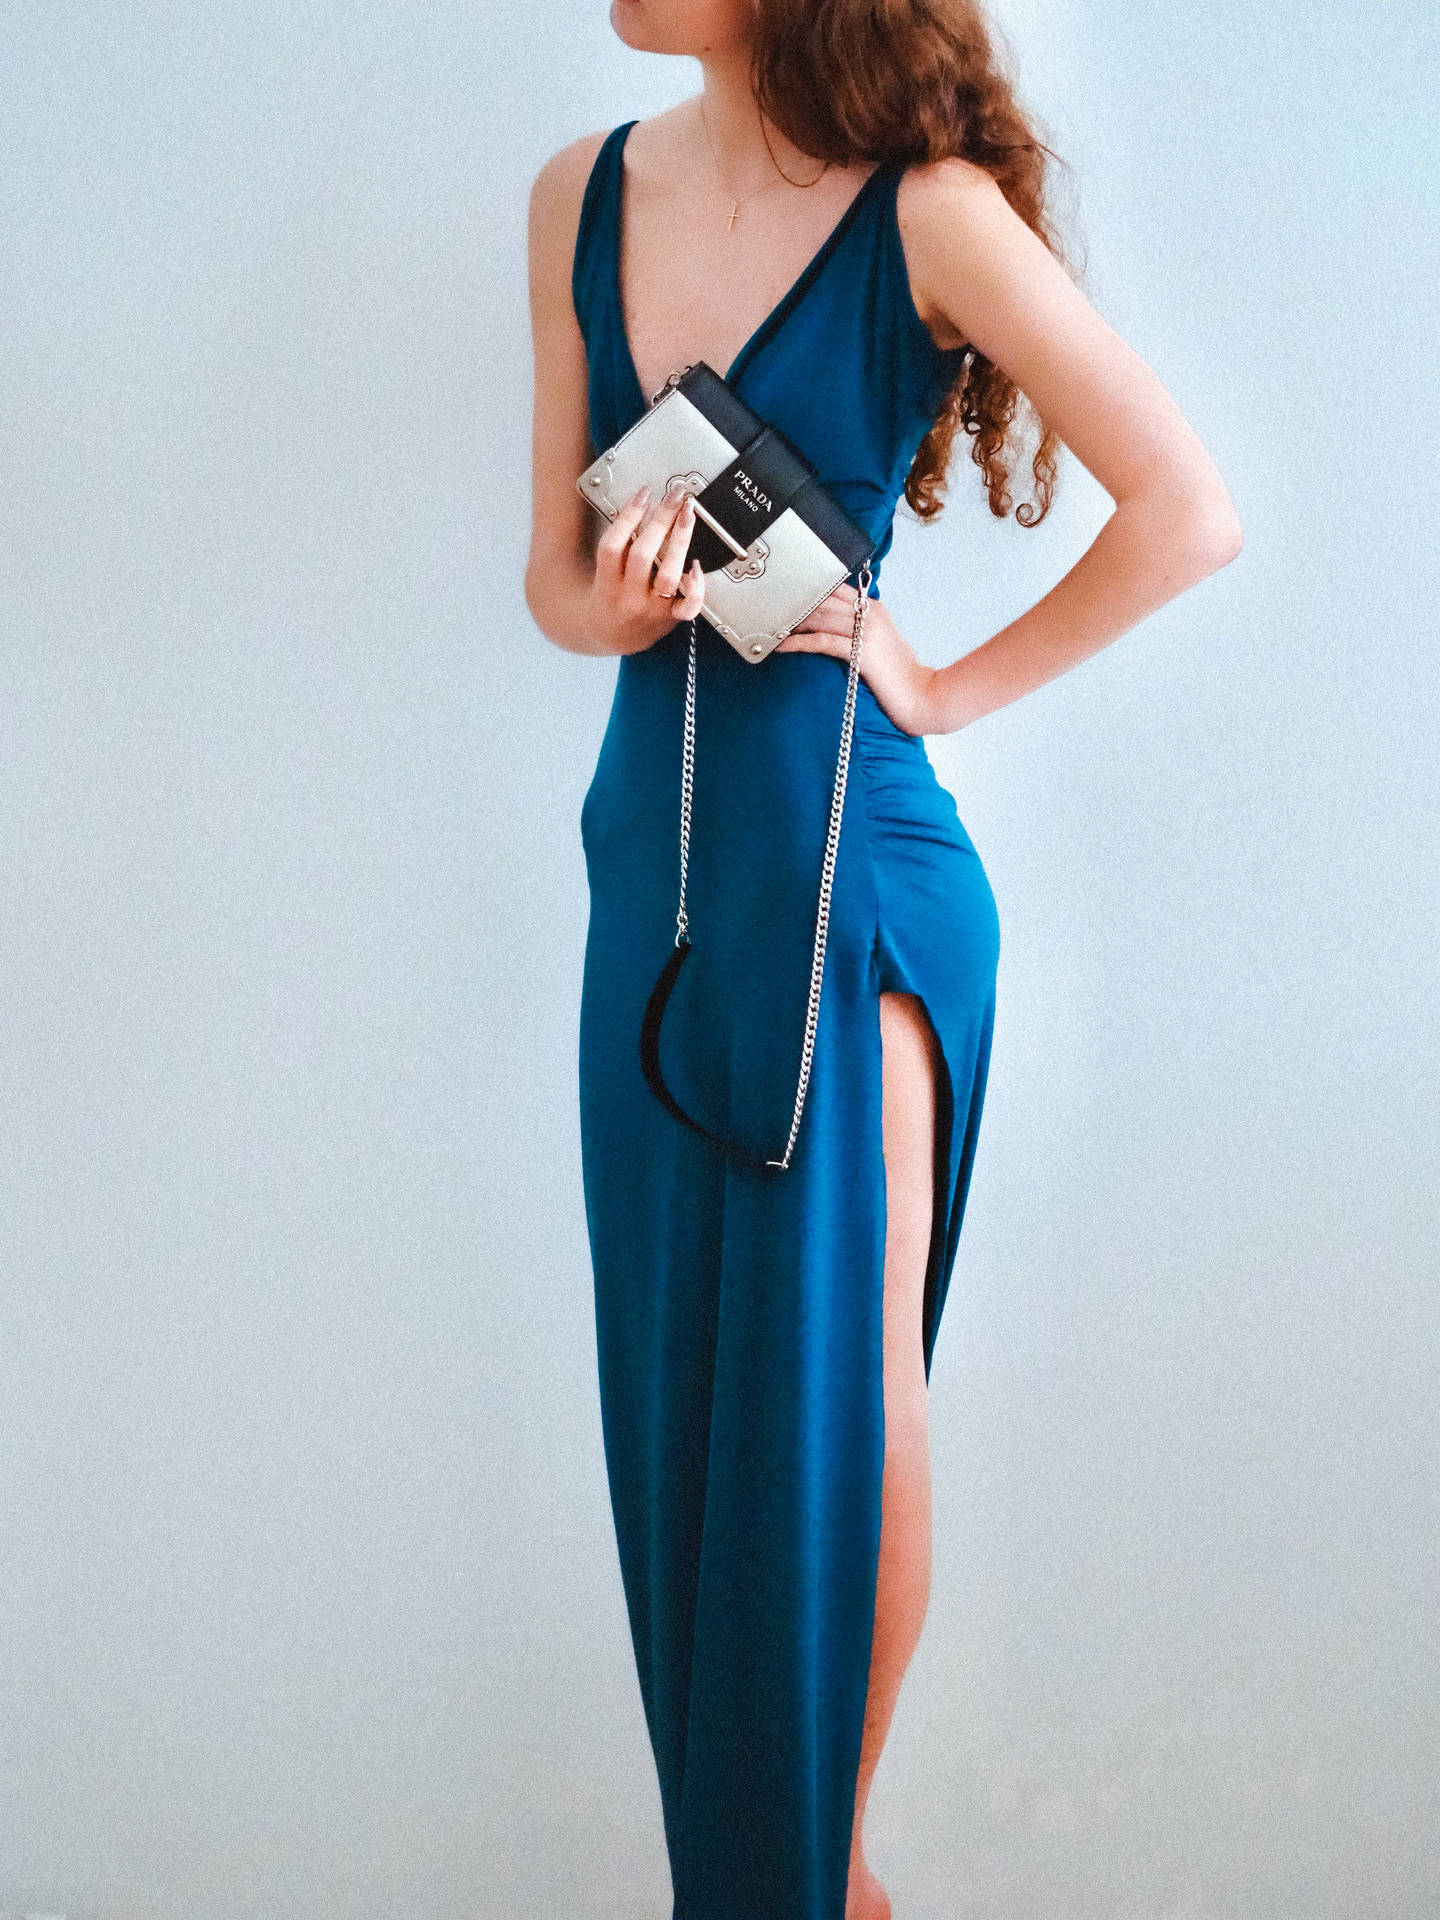 Prada Girl In Blue Dress Background